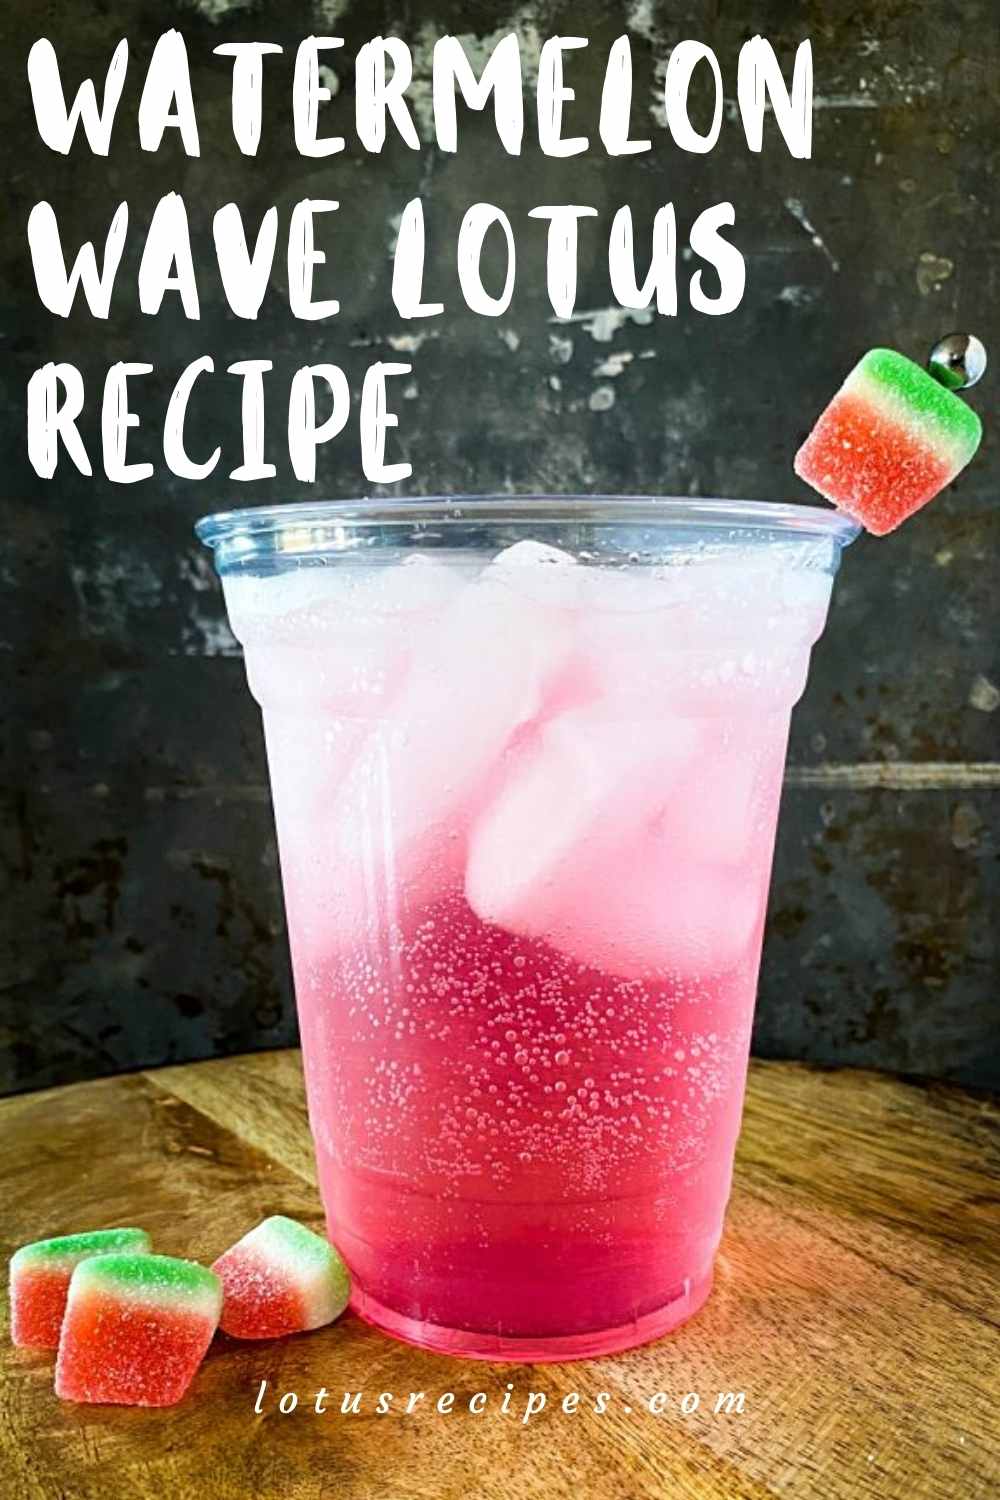 watermelon wave lotus recipe-pin image